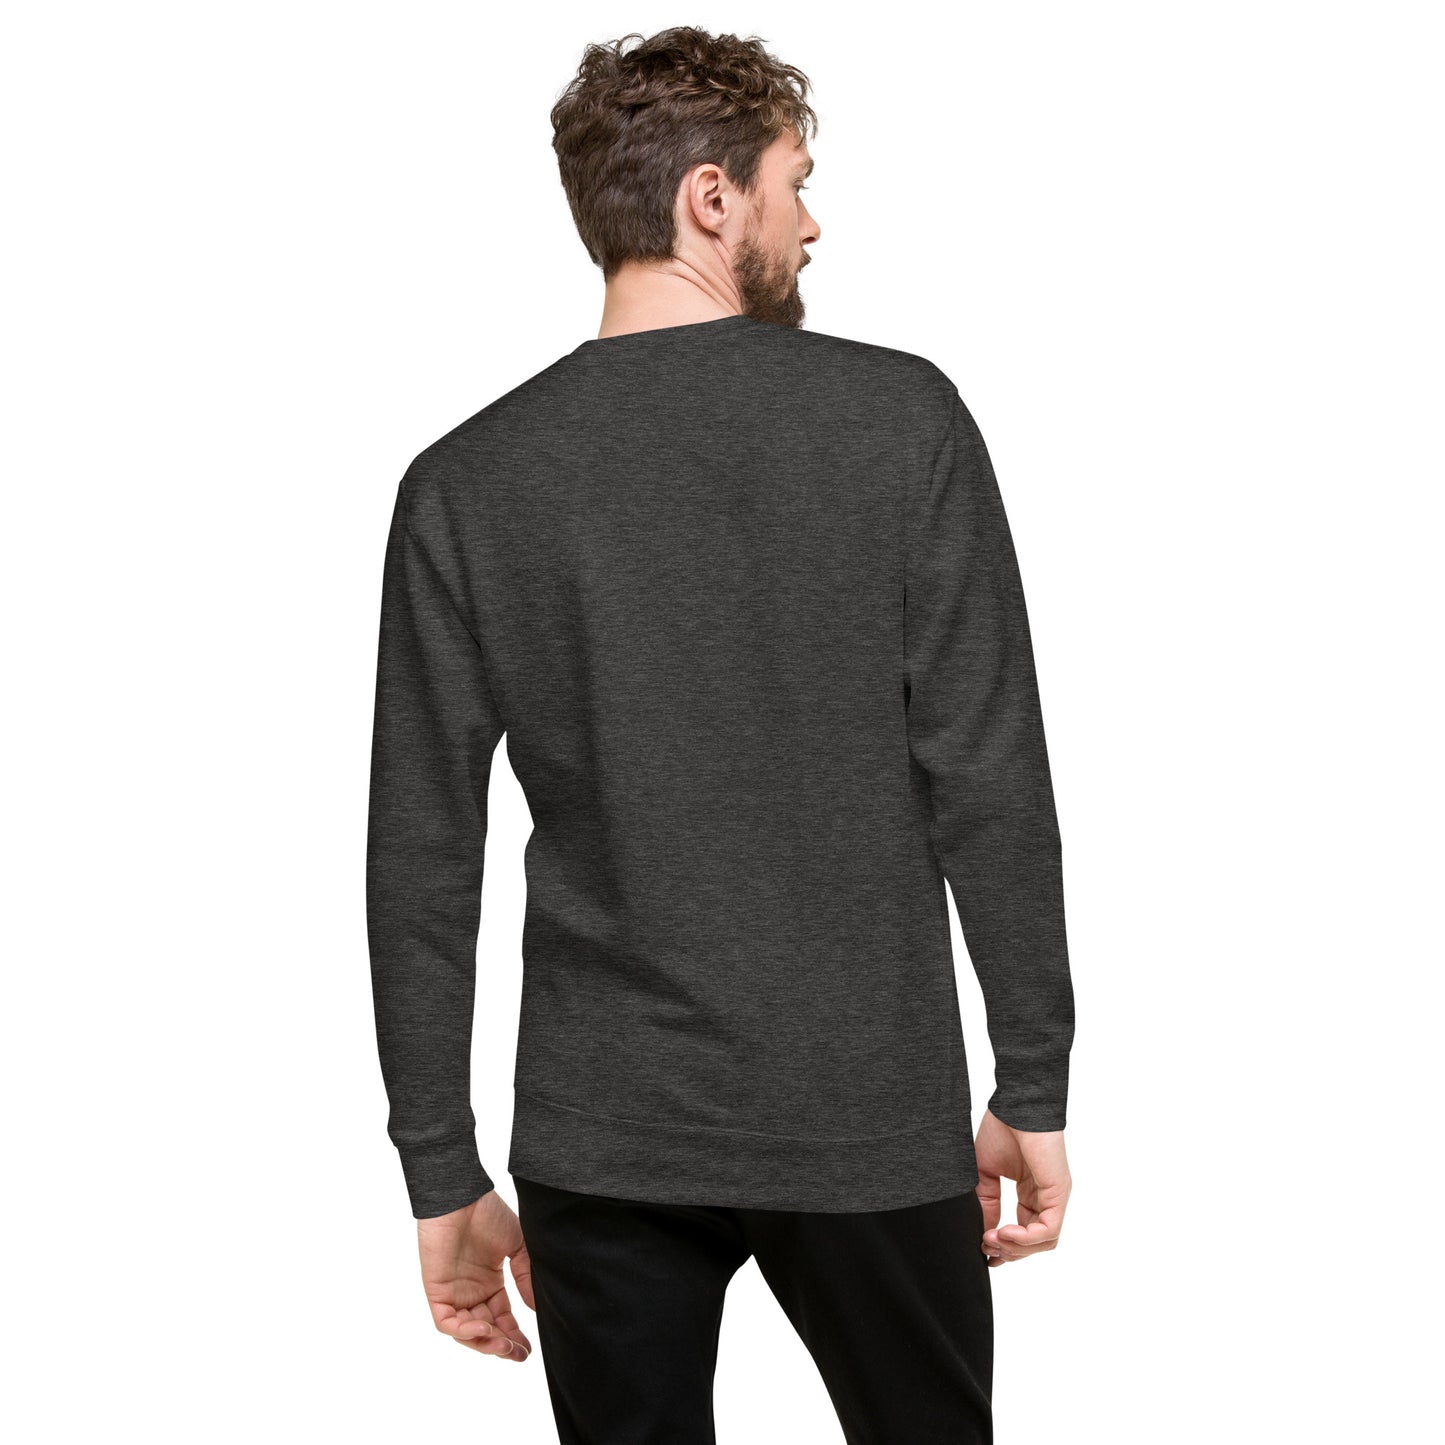 ISFP MBTI Unisex Premium Sweatshirt